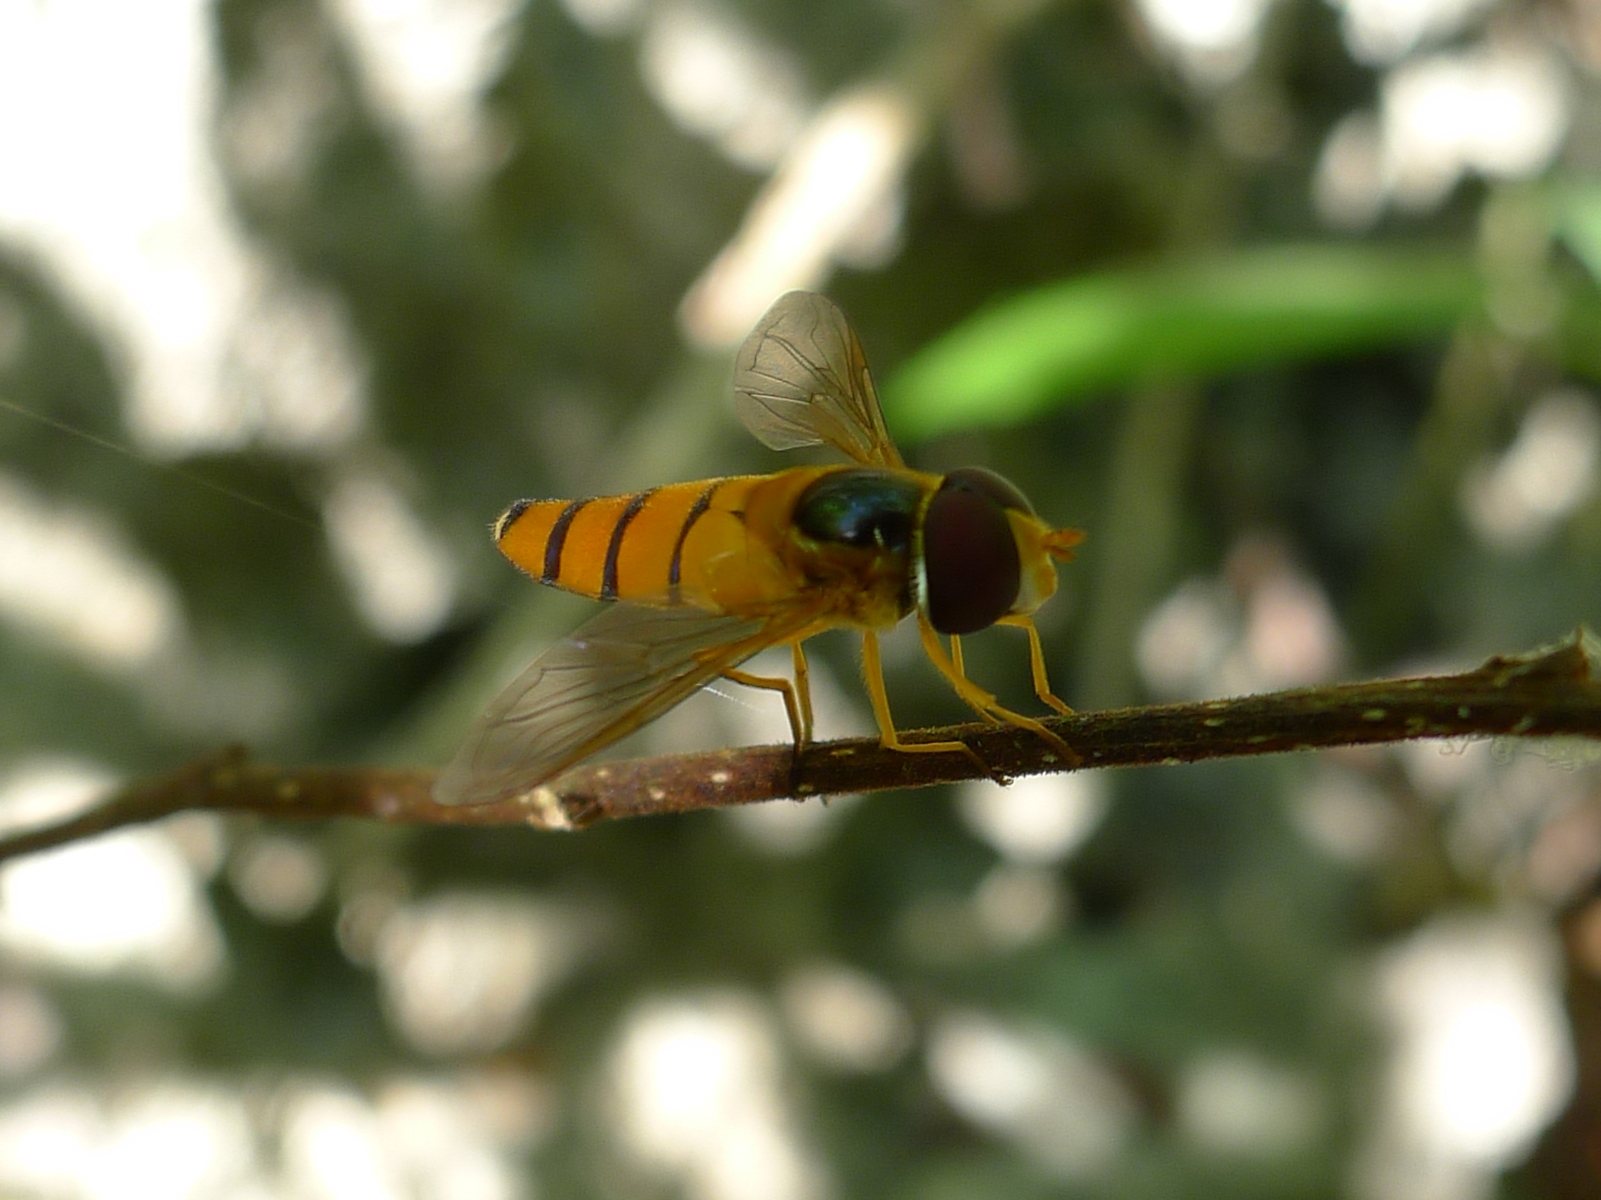 File:Orange striped hover fly on branch (5693864911).jpg - Wikimedia ...